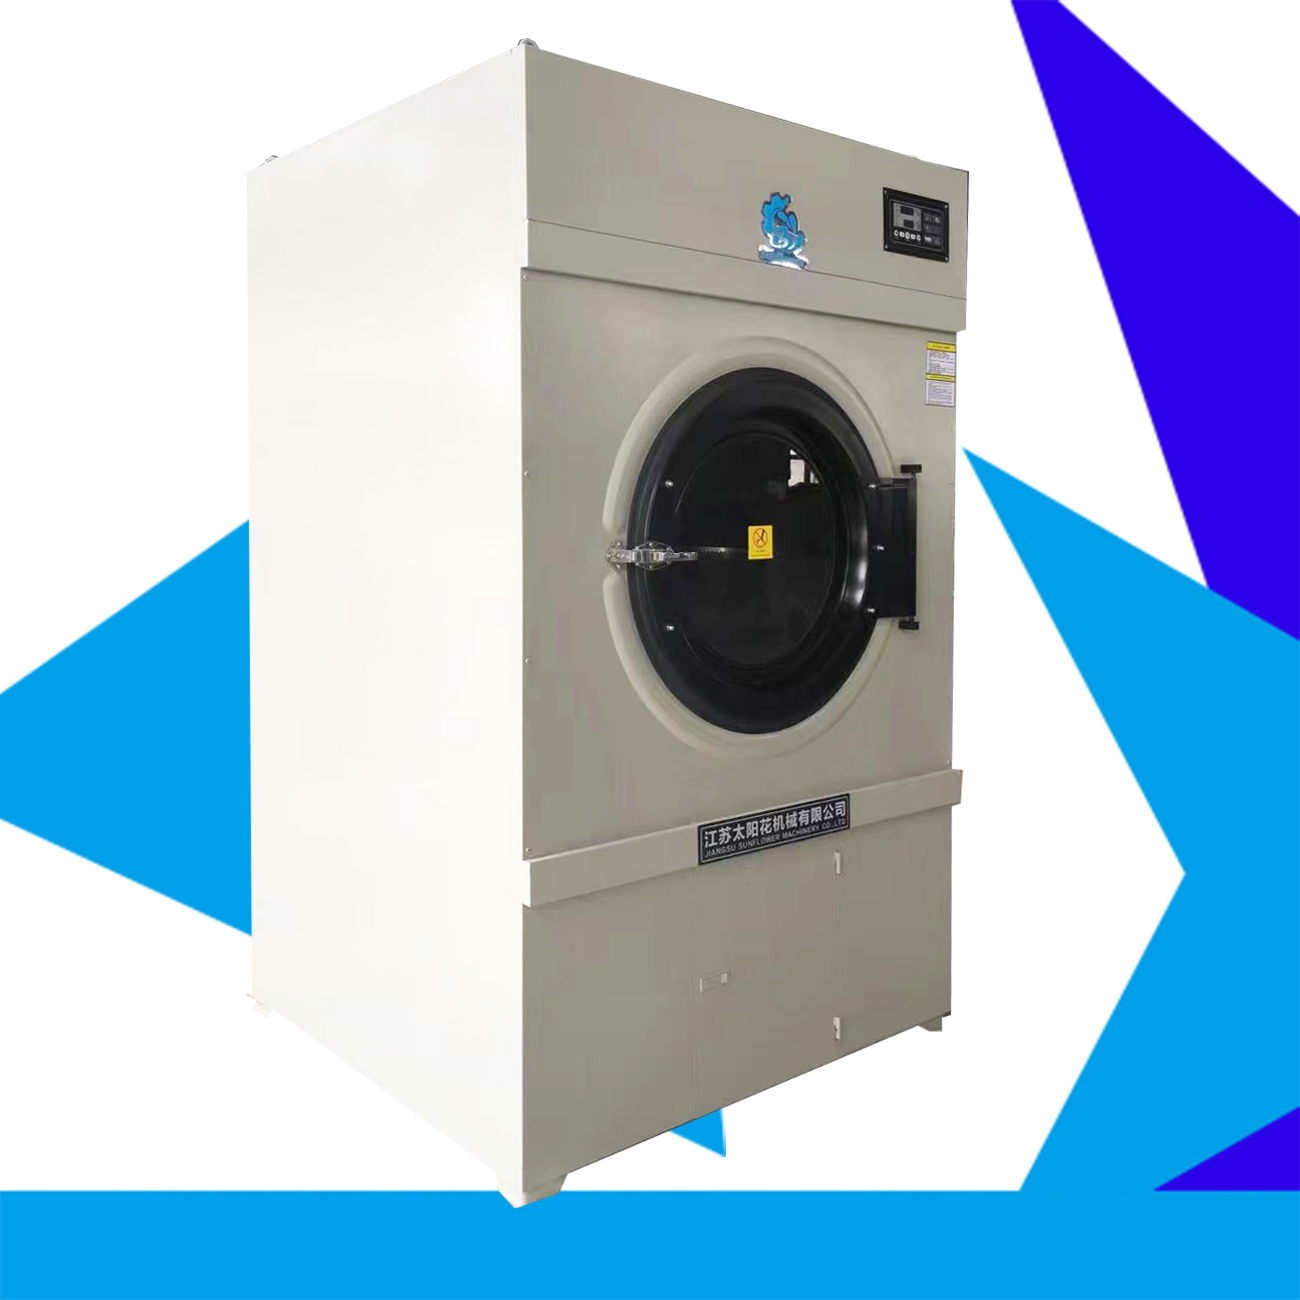 fully-auto tumble dryer garments drying machine 100kgs 220lbs